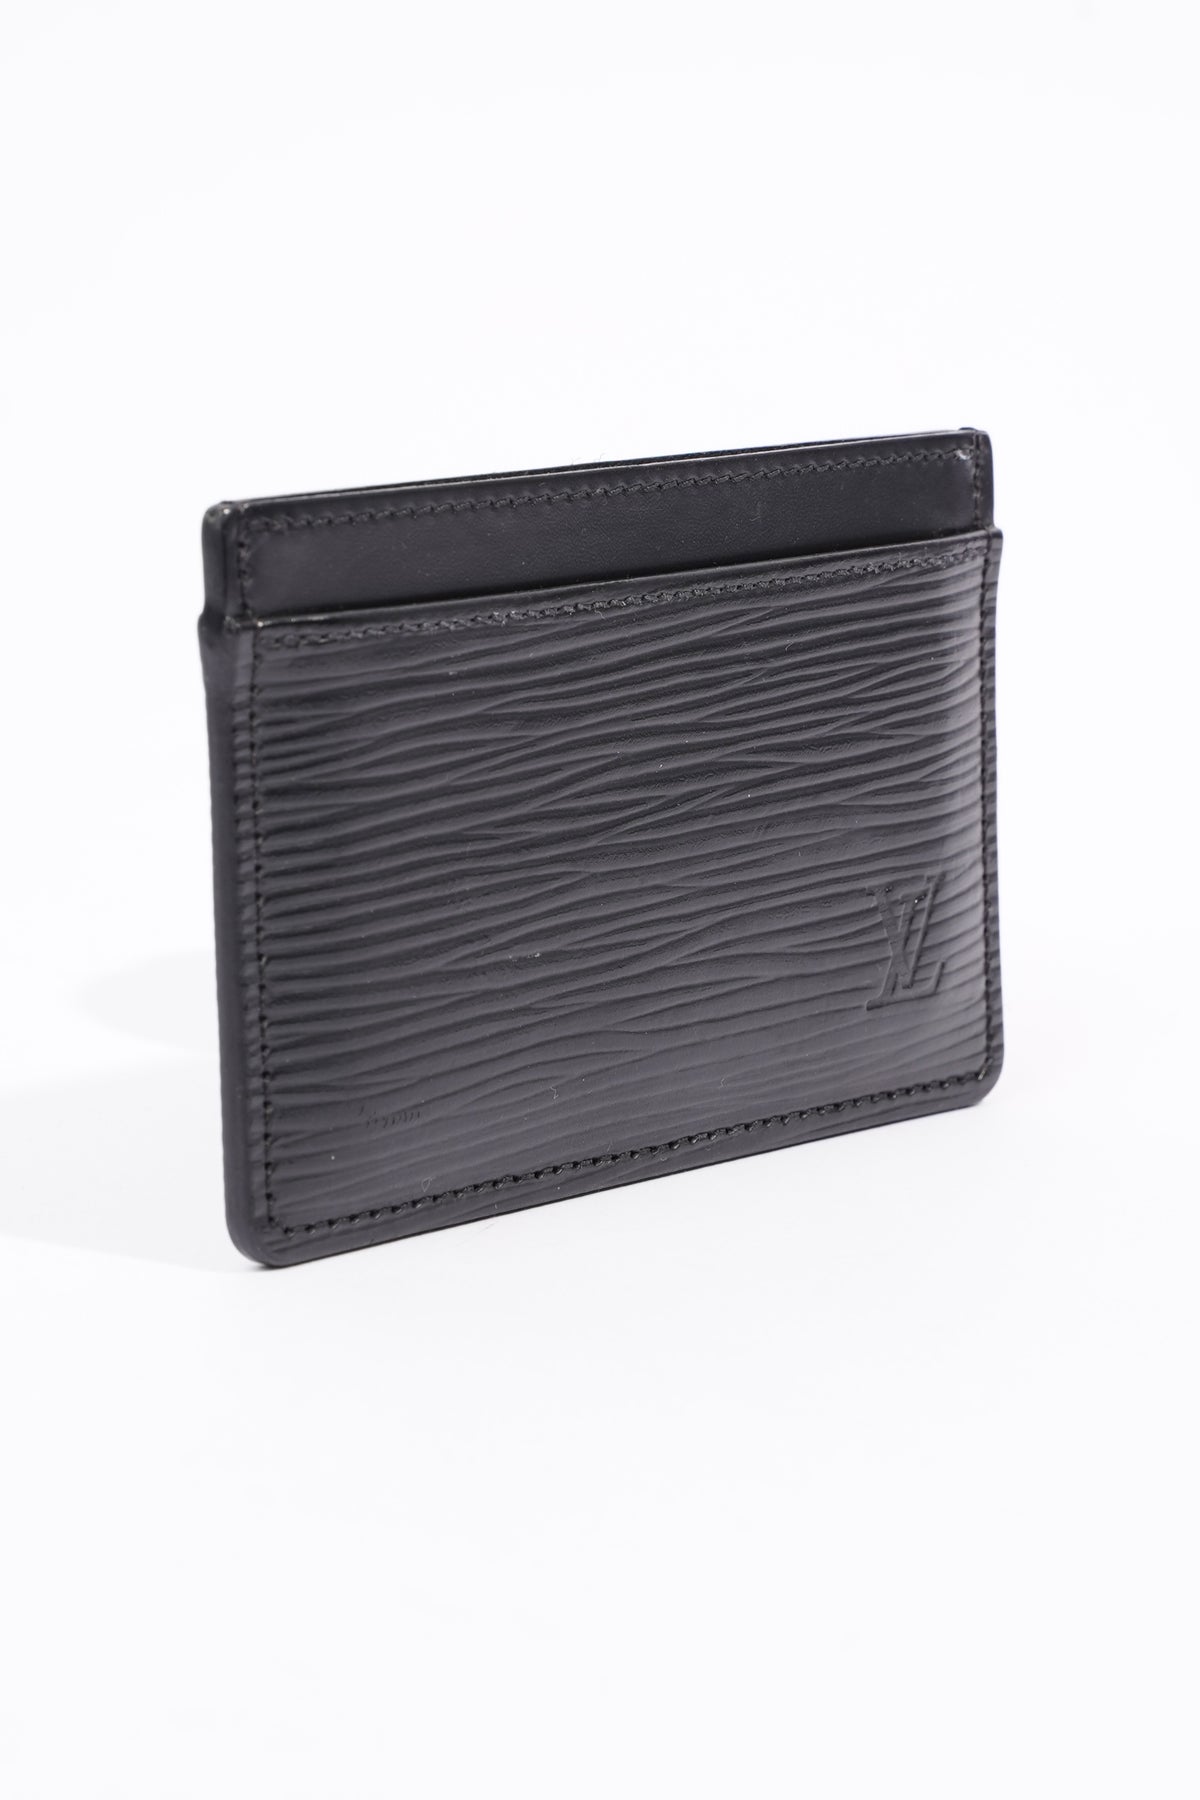 NEW - LV Epi Leather Card Holder Black (NFC)_Louis